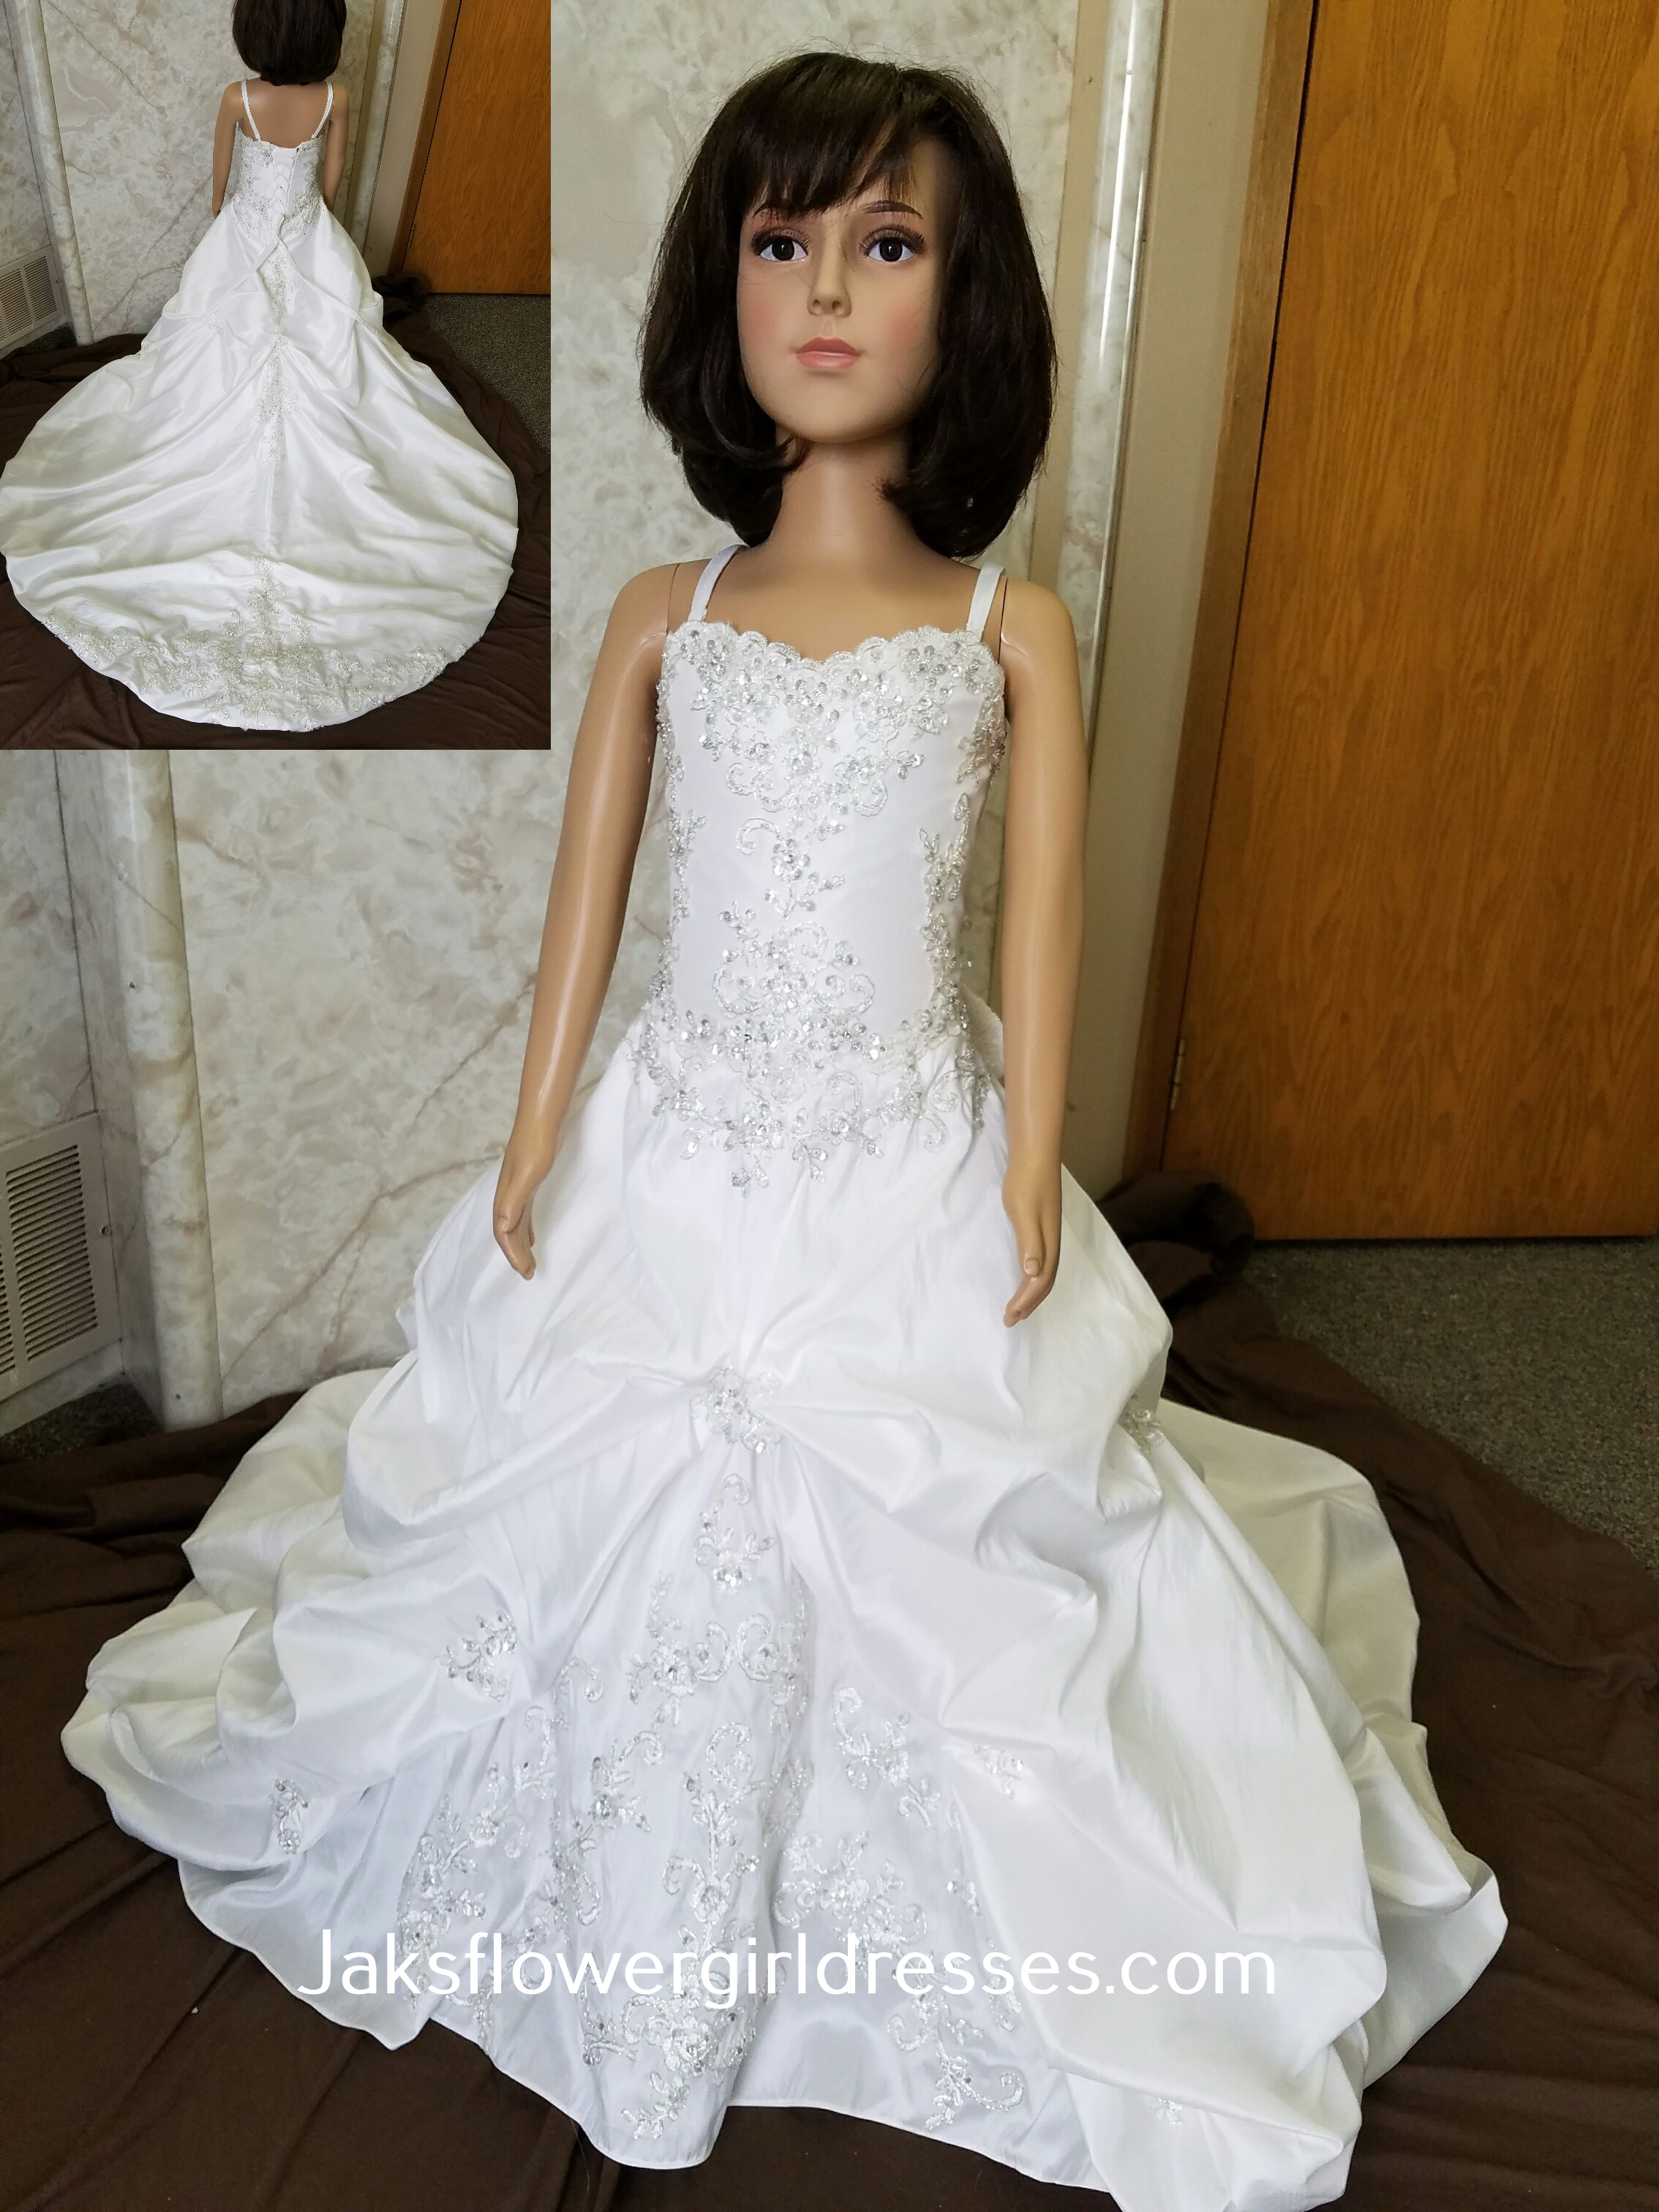 match my wedding dress for my flower girl's dress